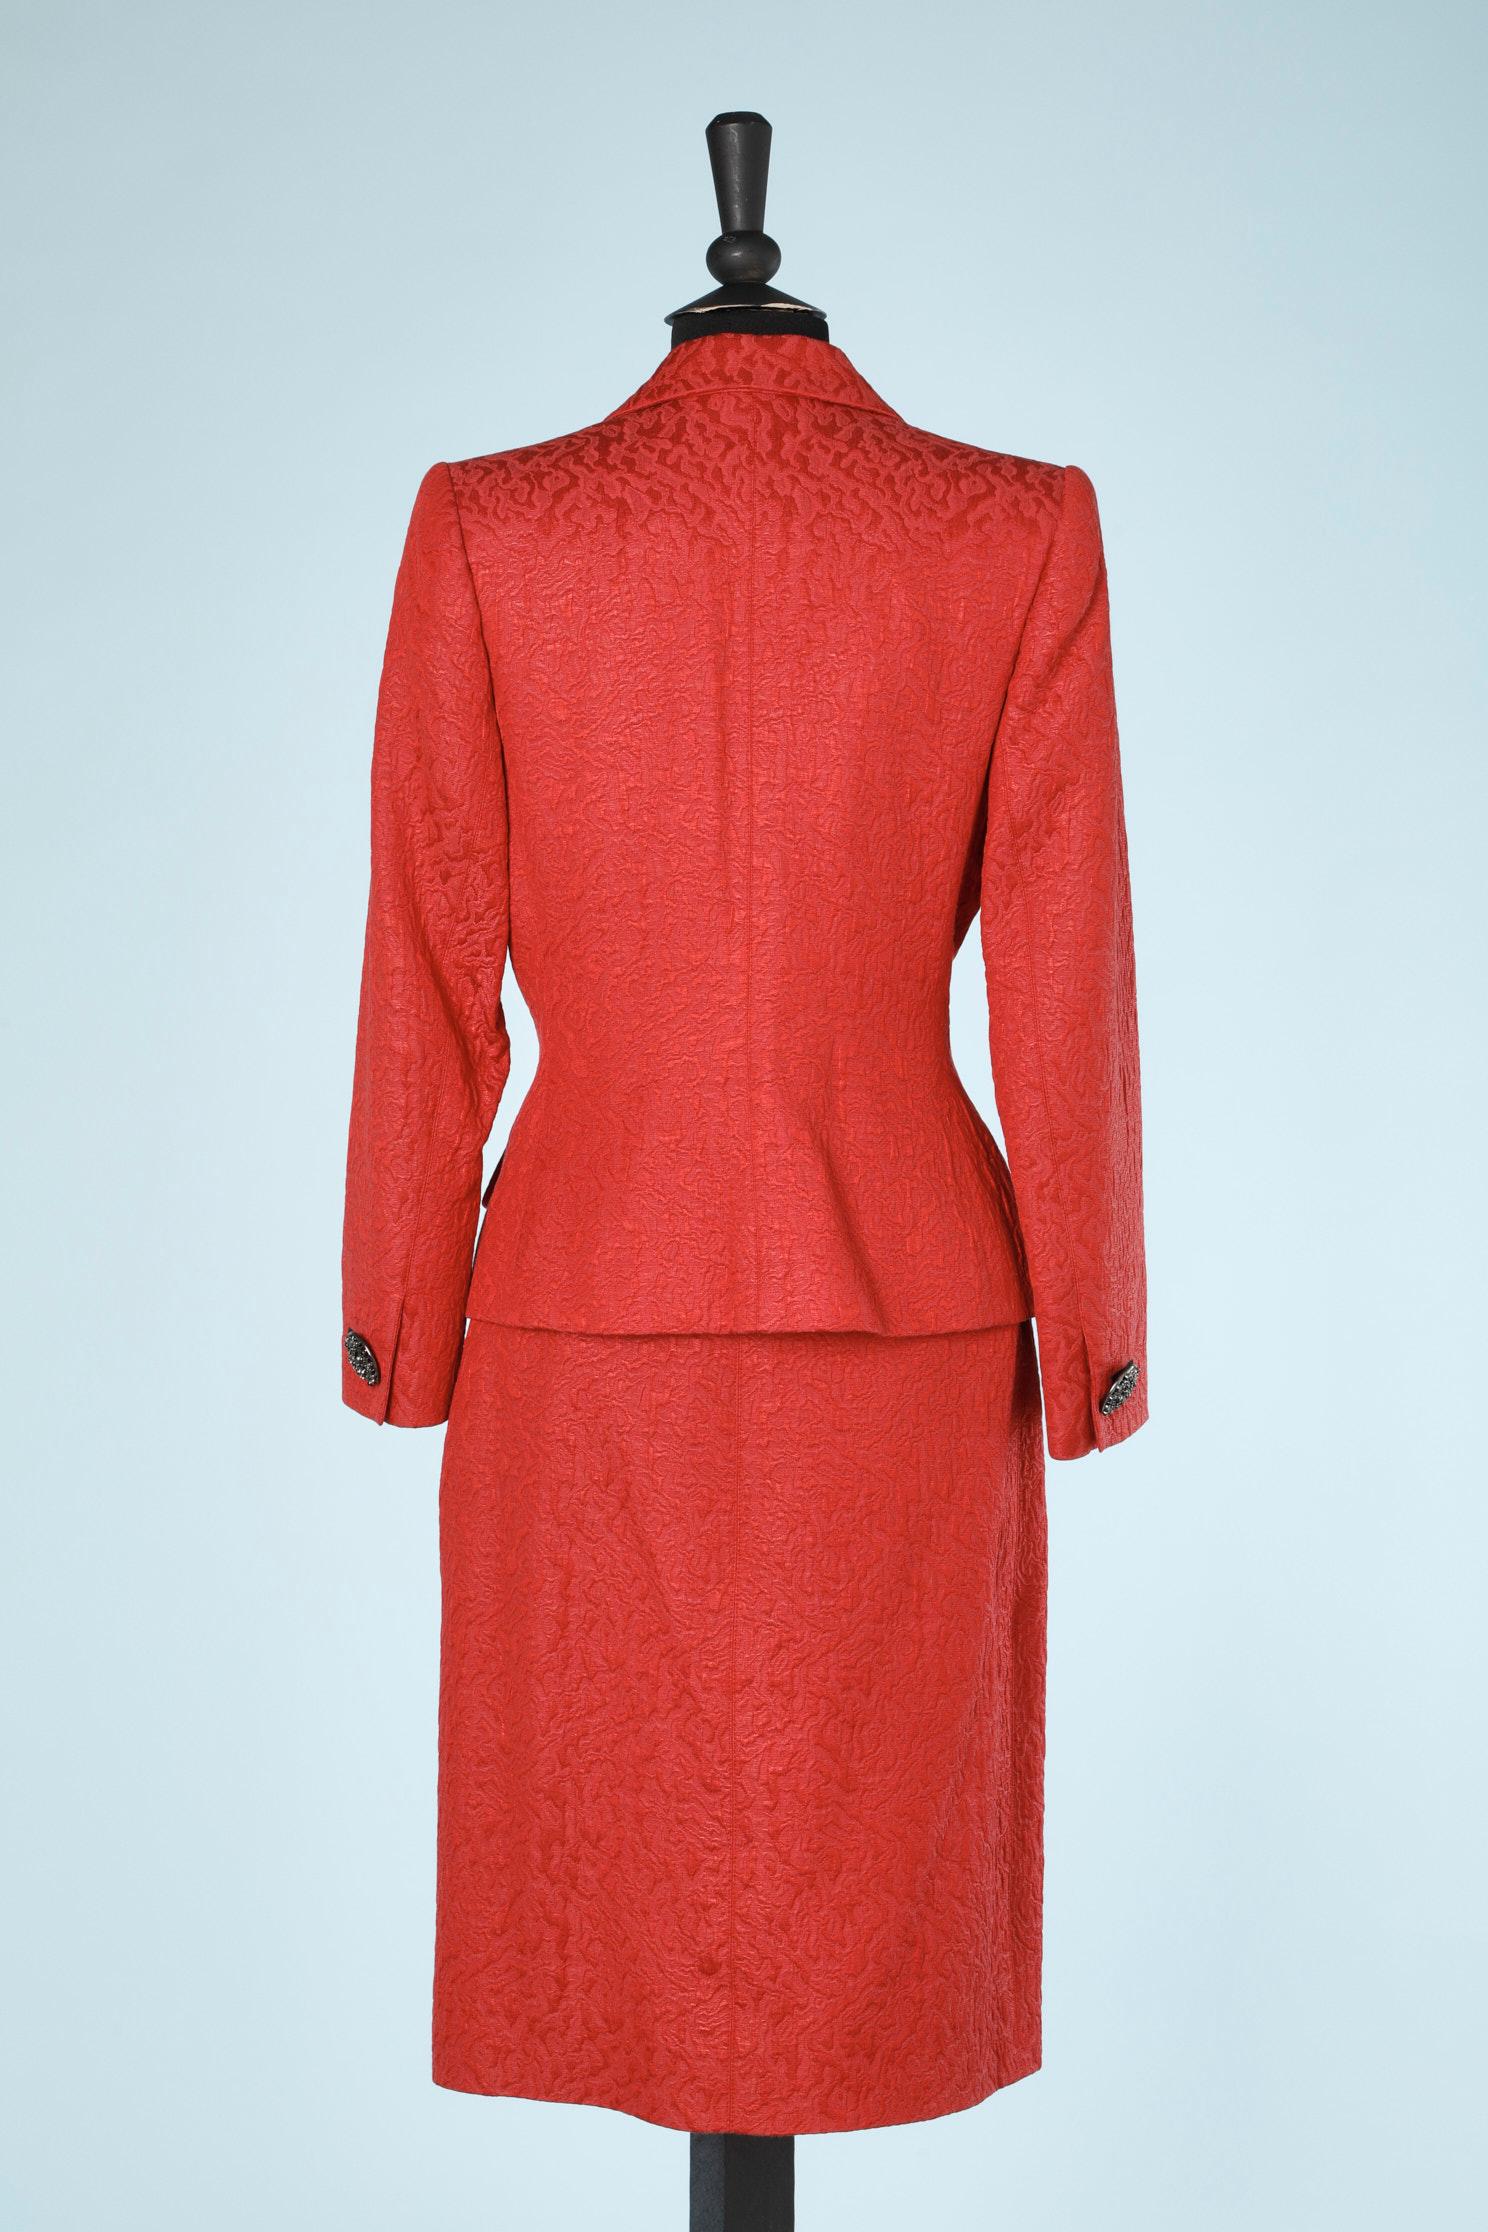 Red damask skit suit Yves Saint Laurent Rive Gauche  For Sale 2